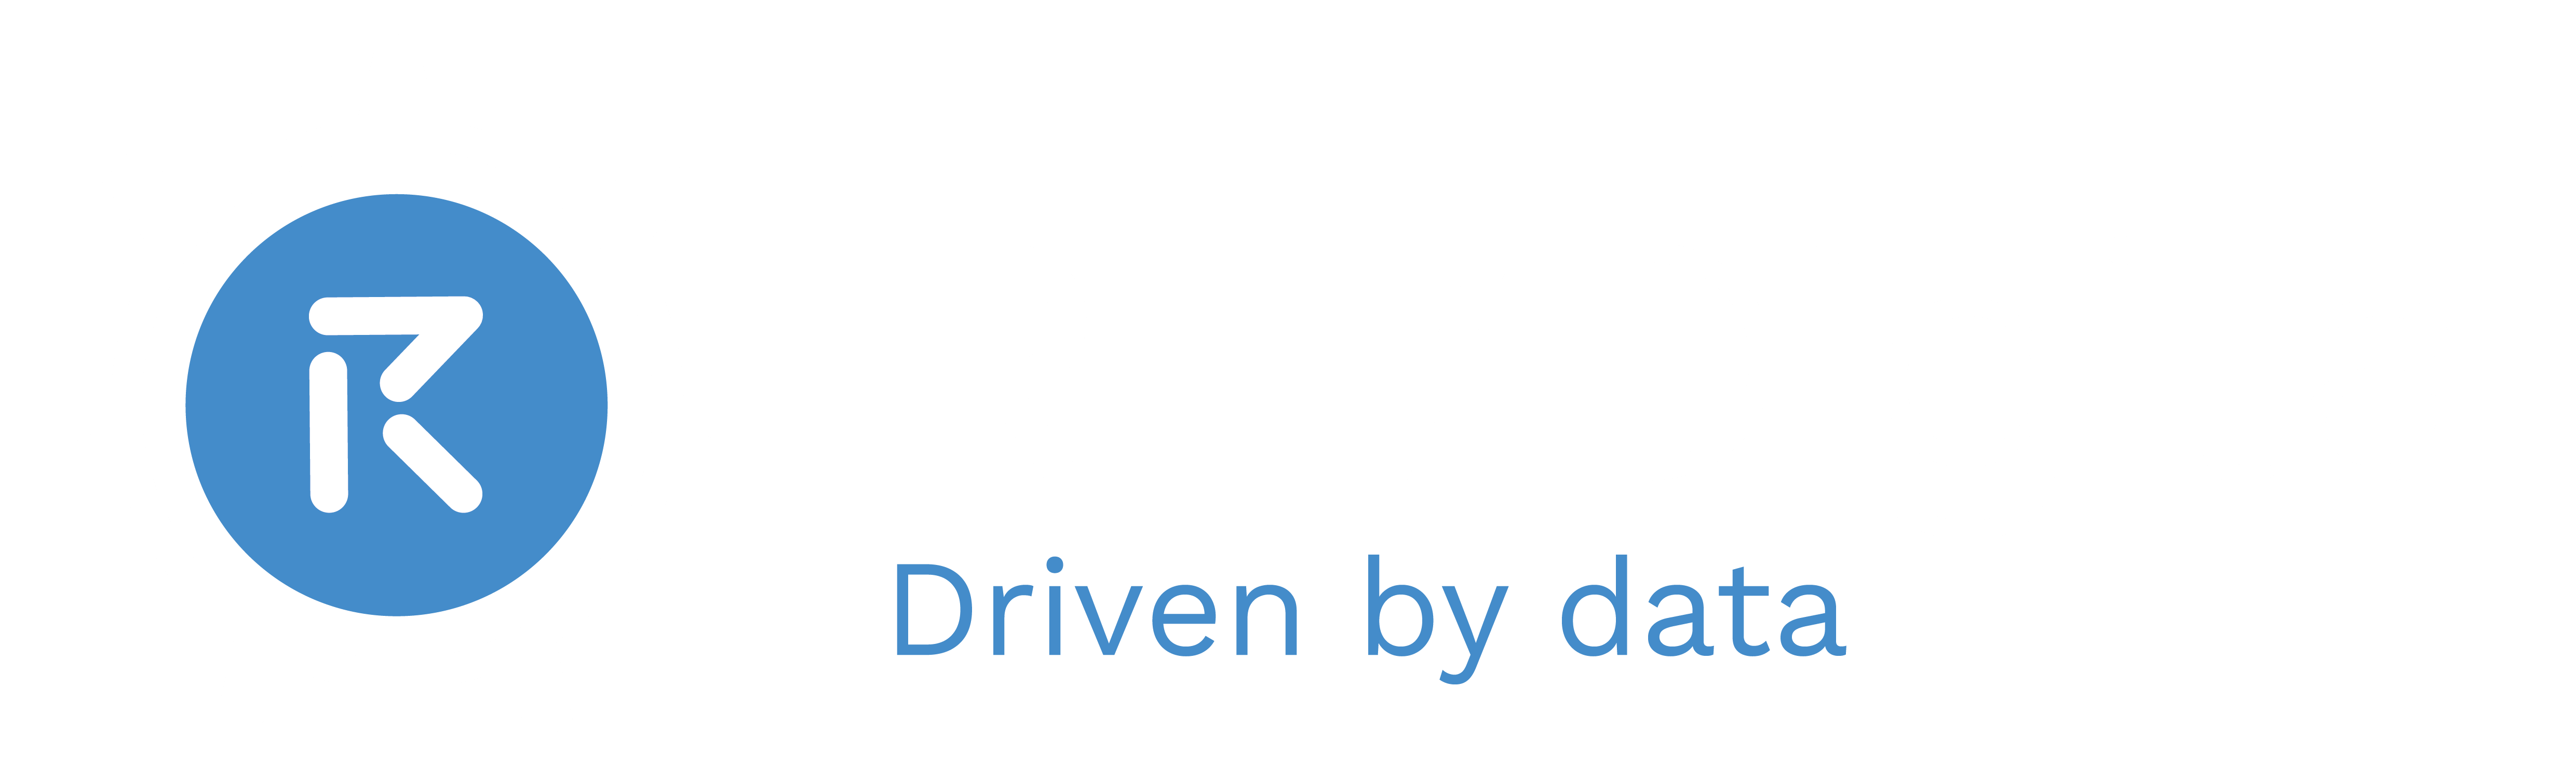 RT7Digital